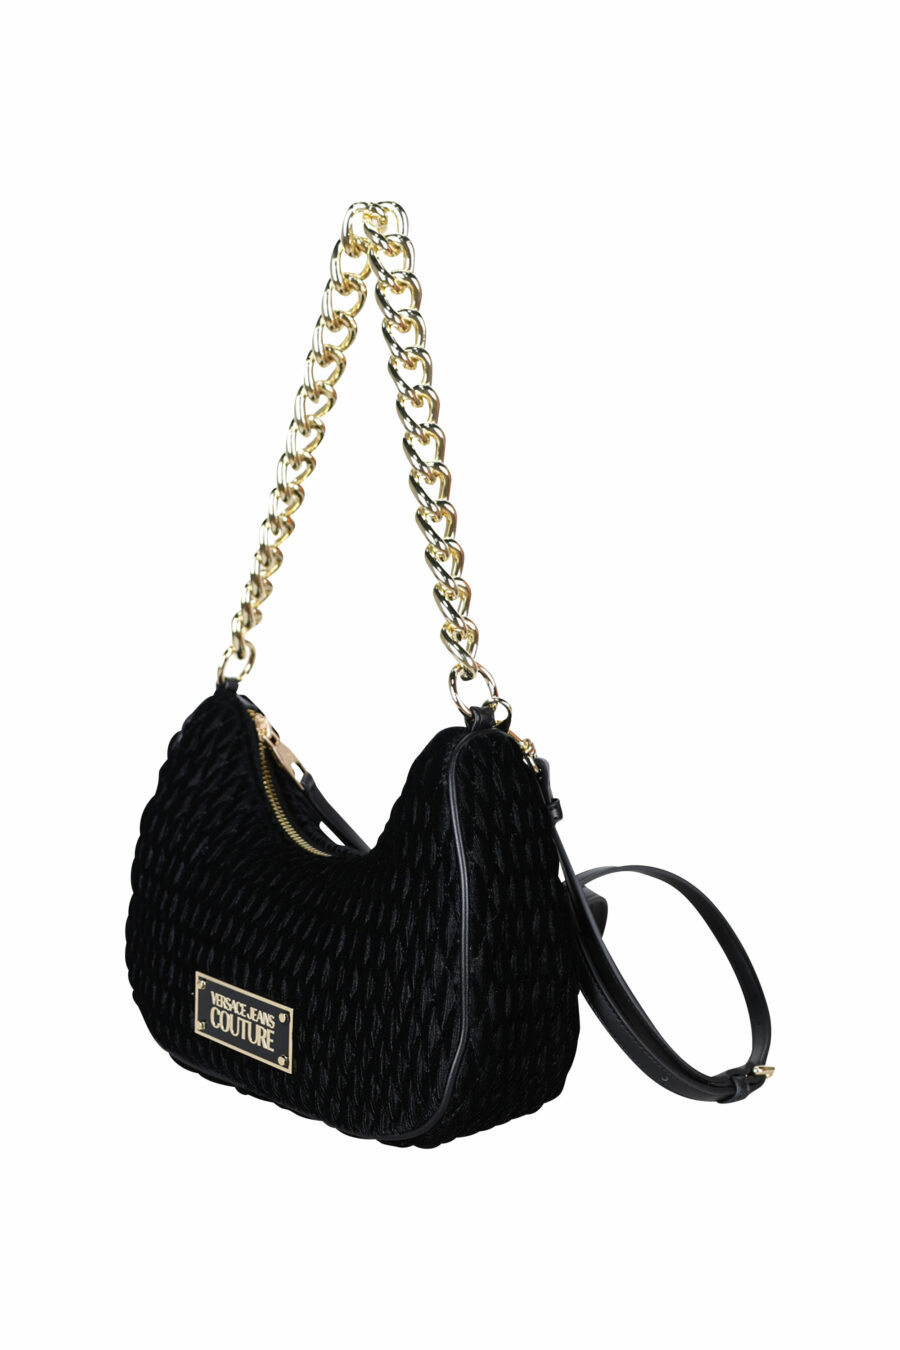 Black velvet hobo style shoulder bag with chain and logo plaque - 8052019408690 1